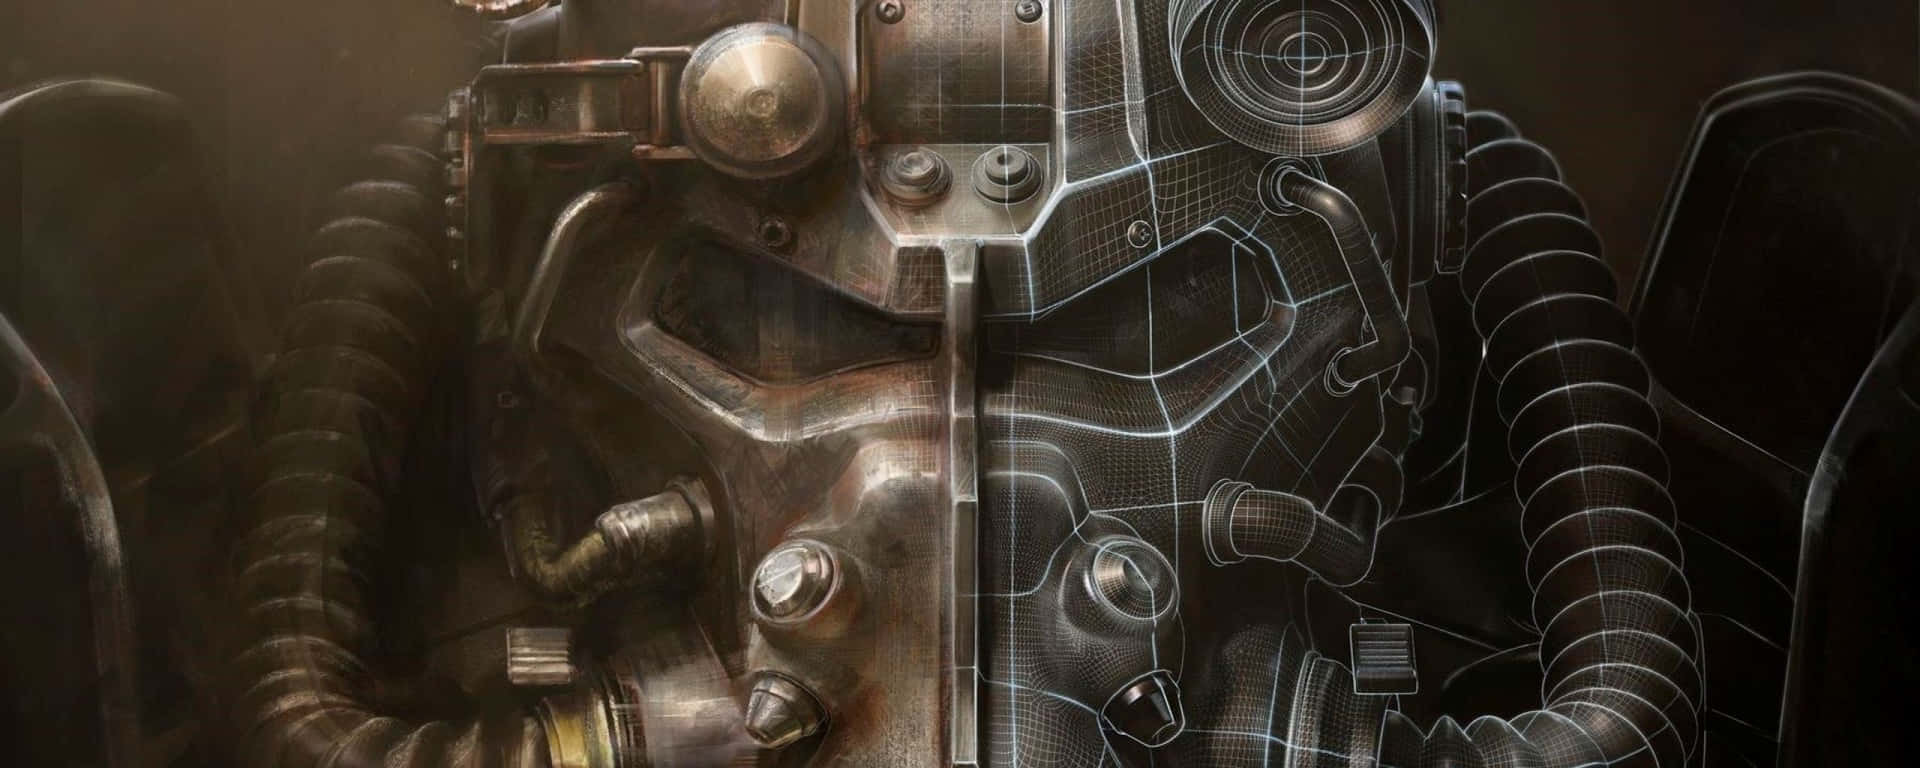 Lad Fallout 4-HD Wallpapers givere dig en voldsom demomodus! Wallpaper